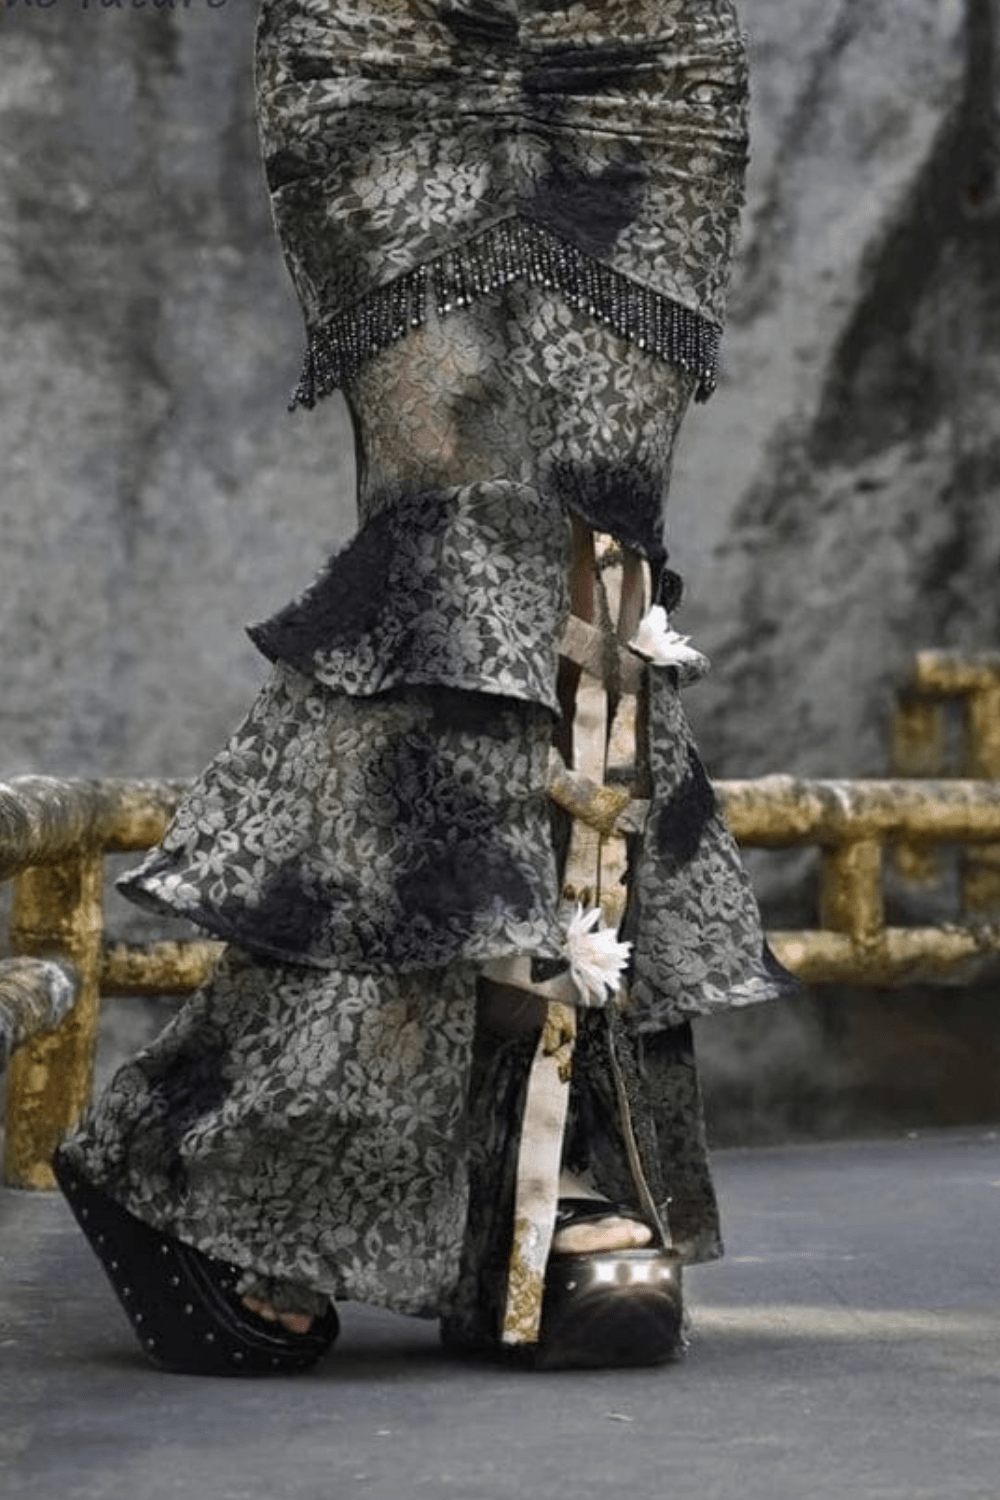 ExploreAllFinds - Gothic Skirts Irregular Hollow Out Chic Design - ExploreAllFinds